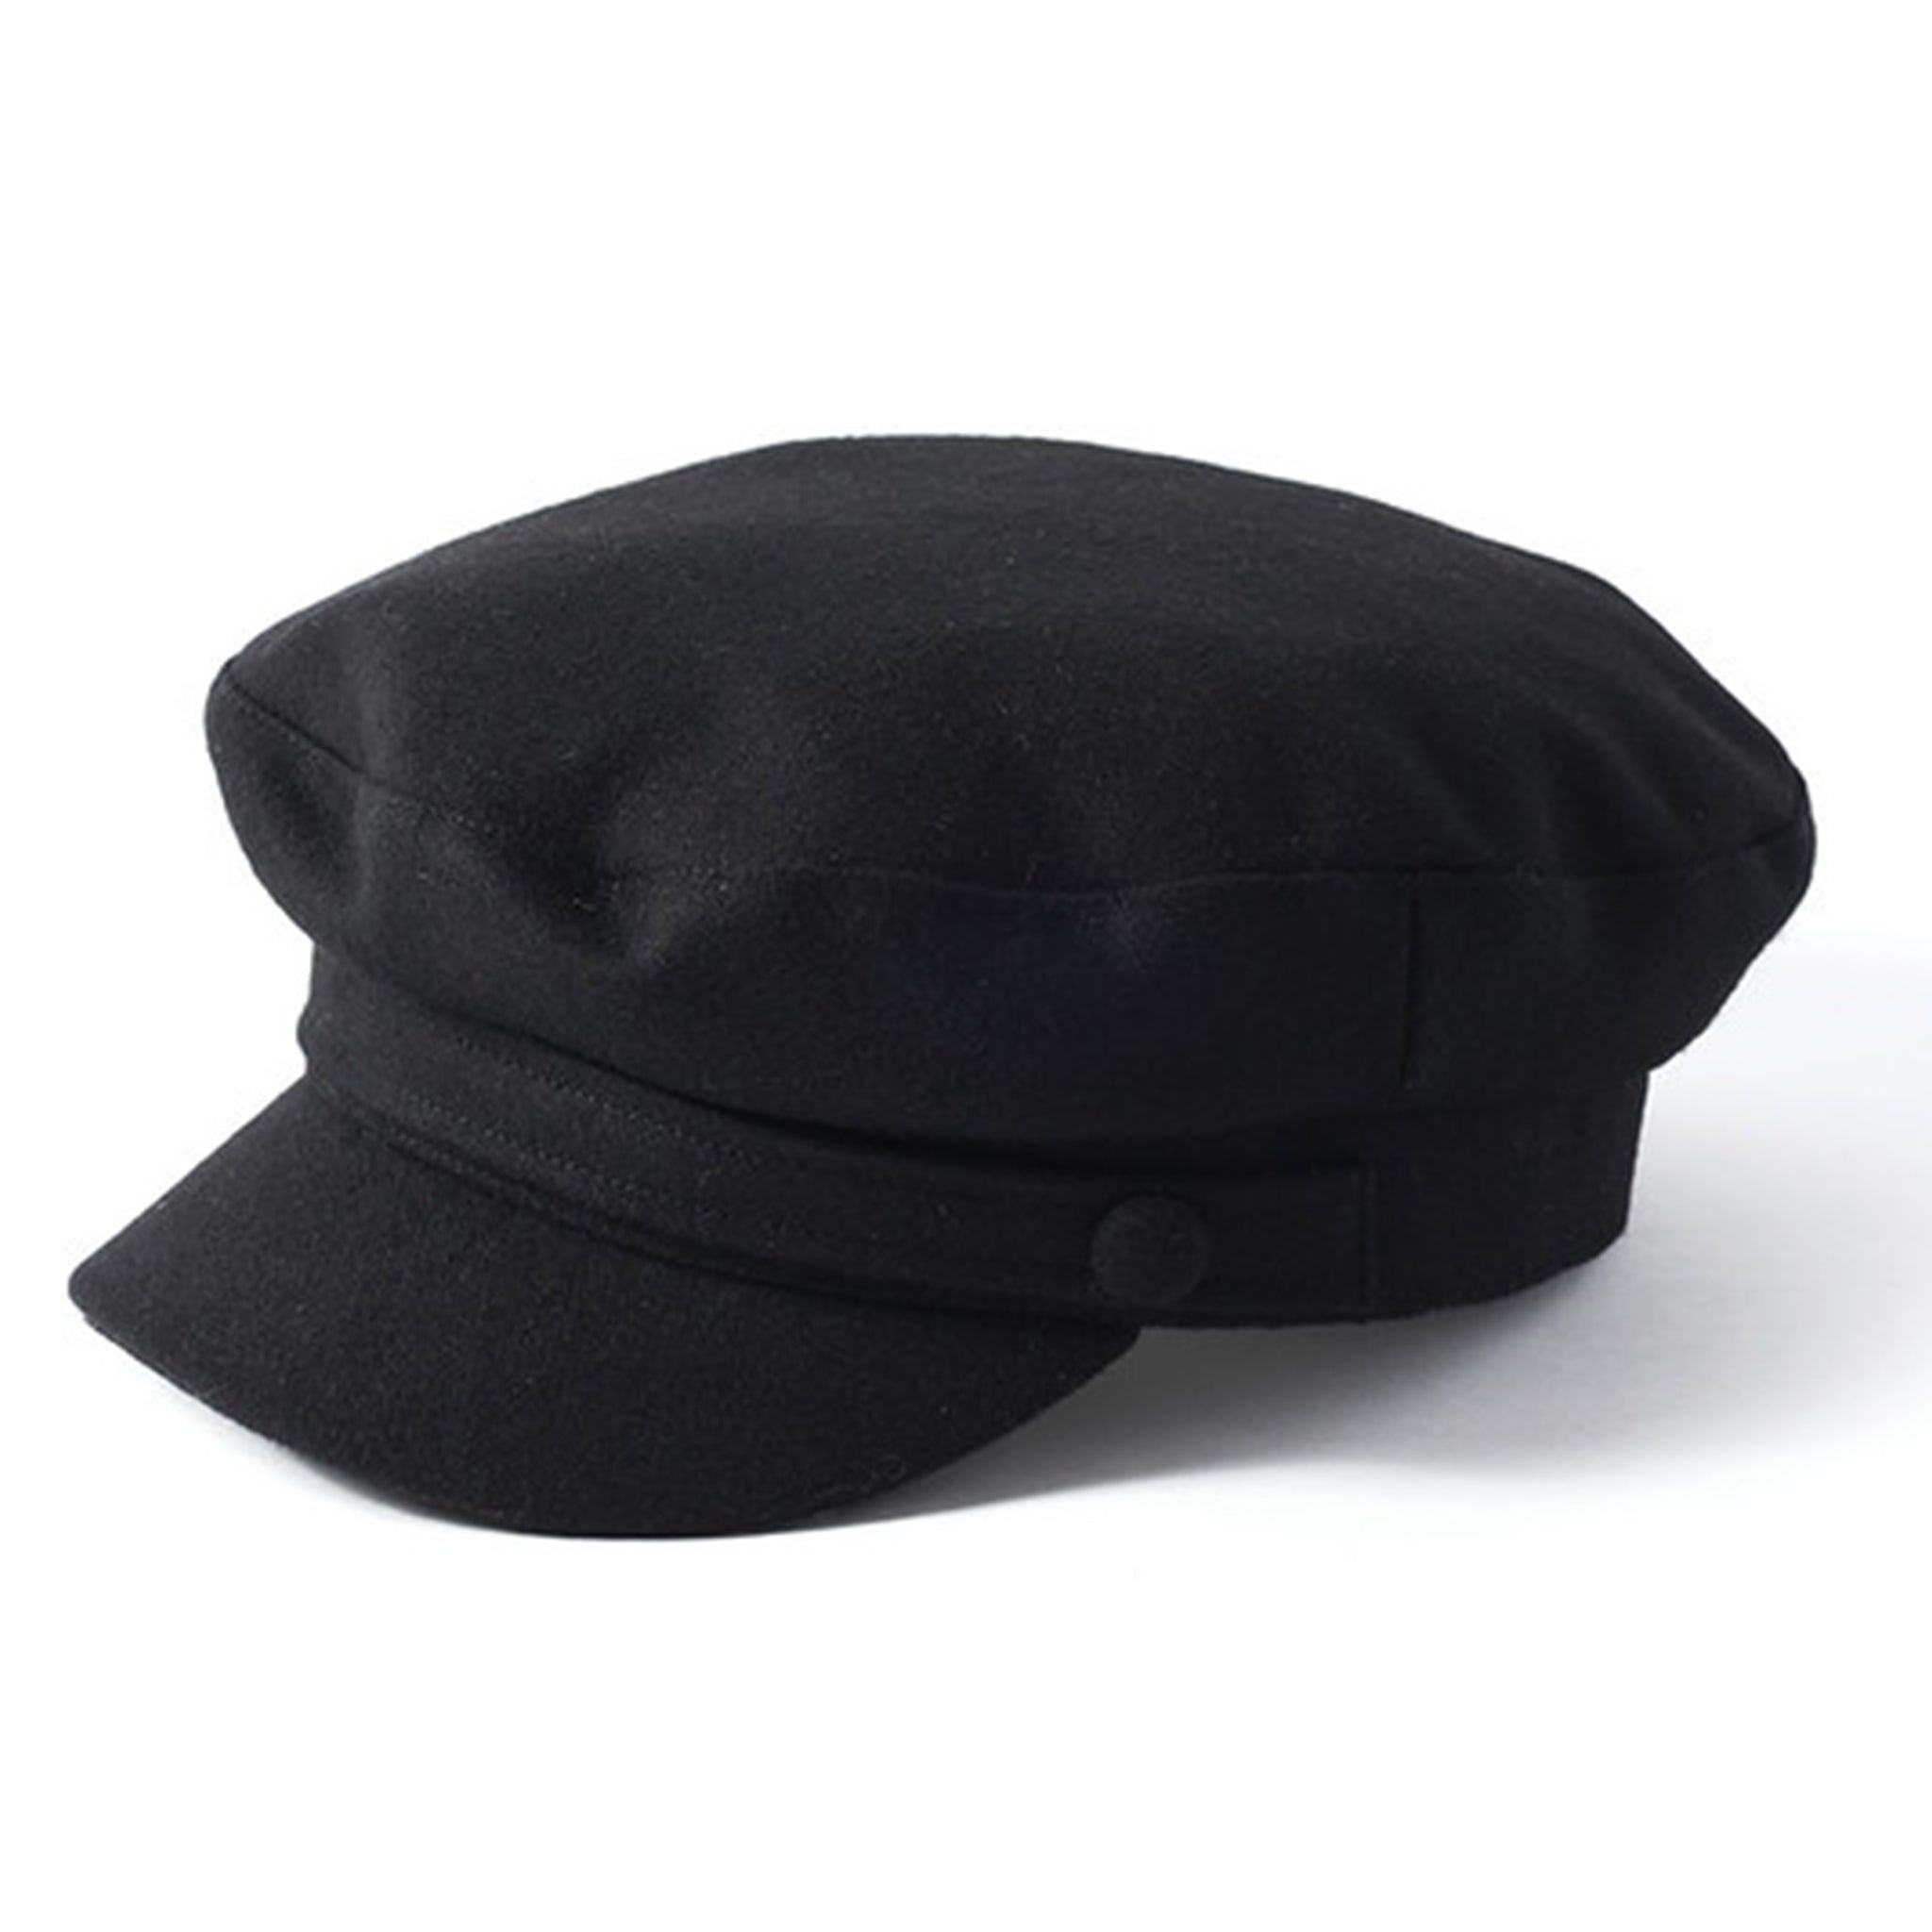 The Hat Shop Failsworth Mariner Melton Black Cap